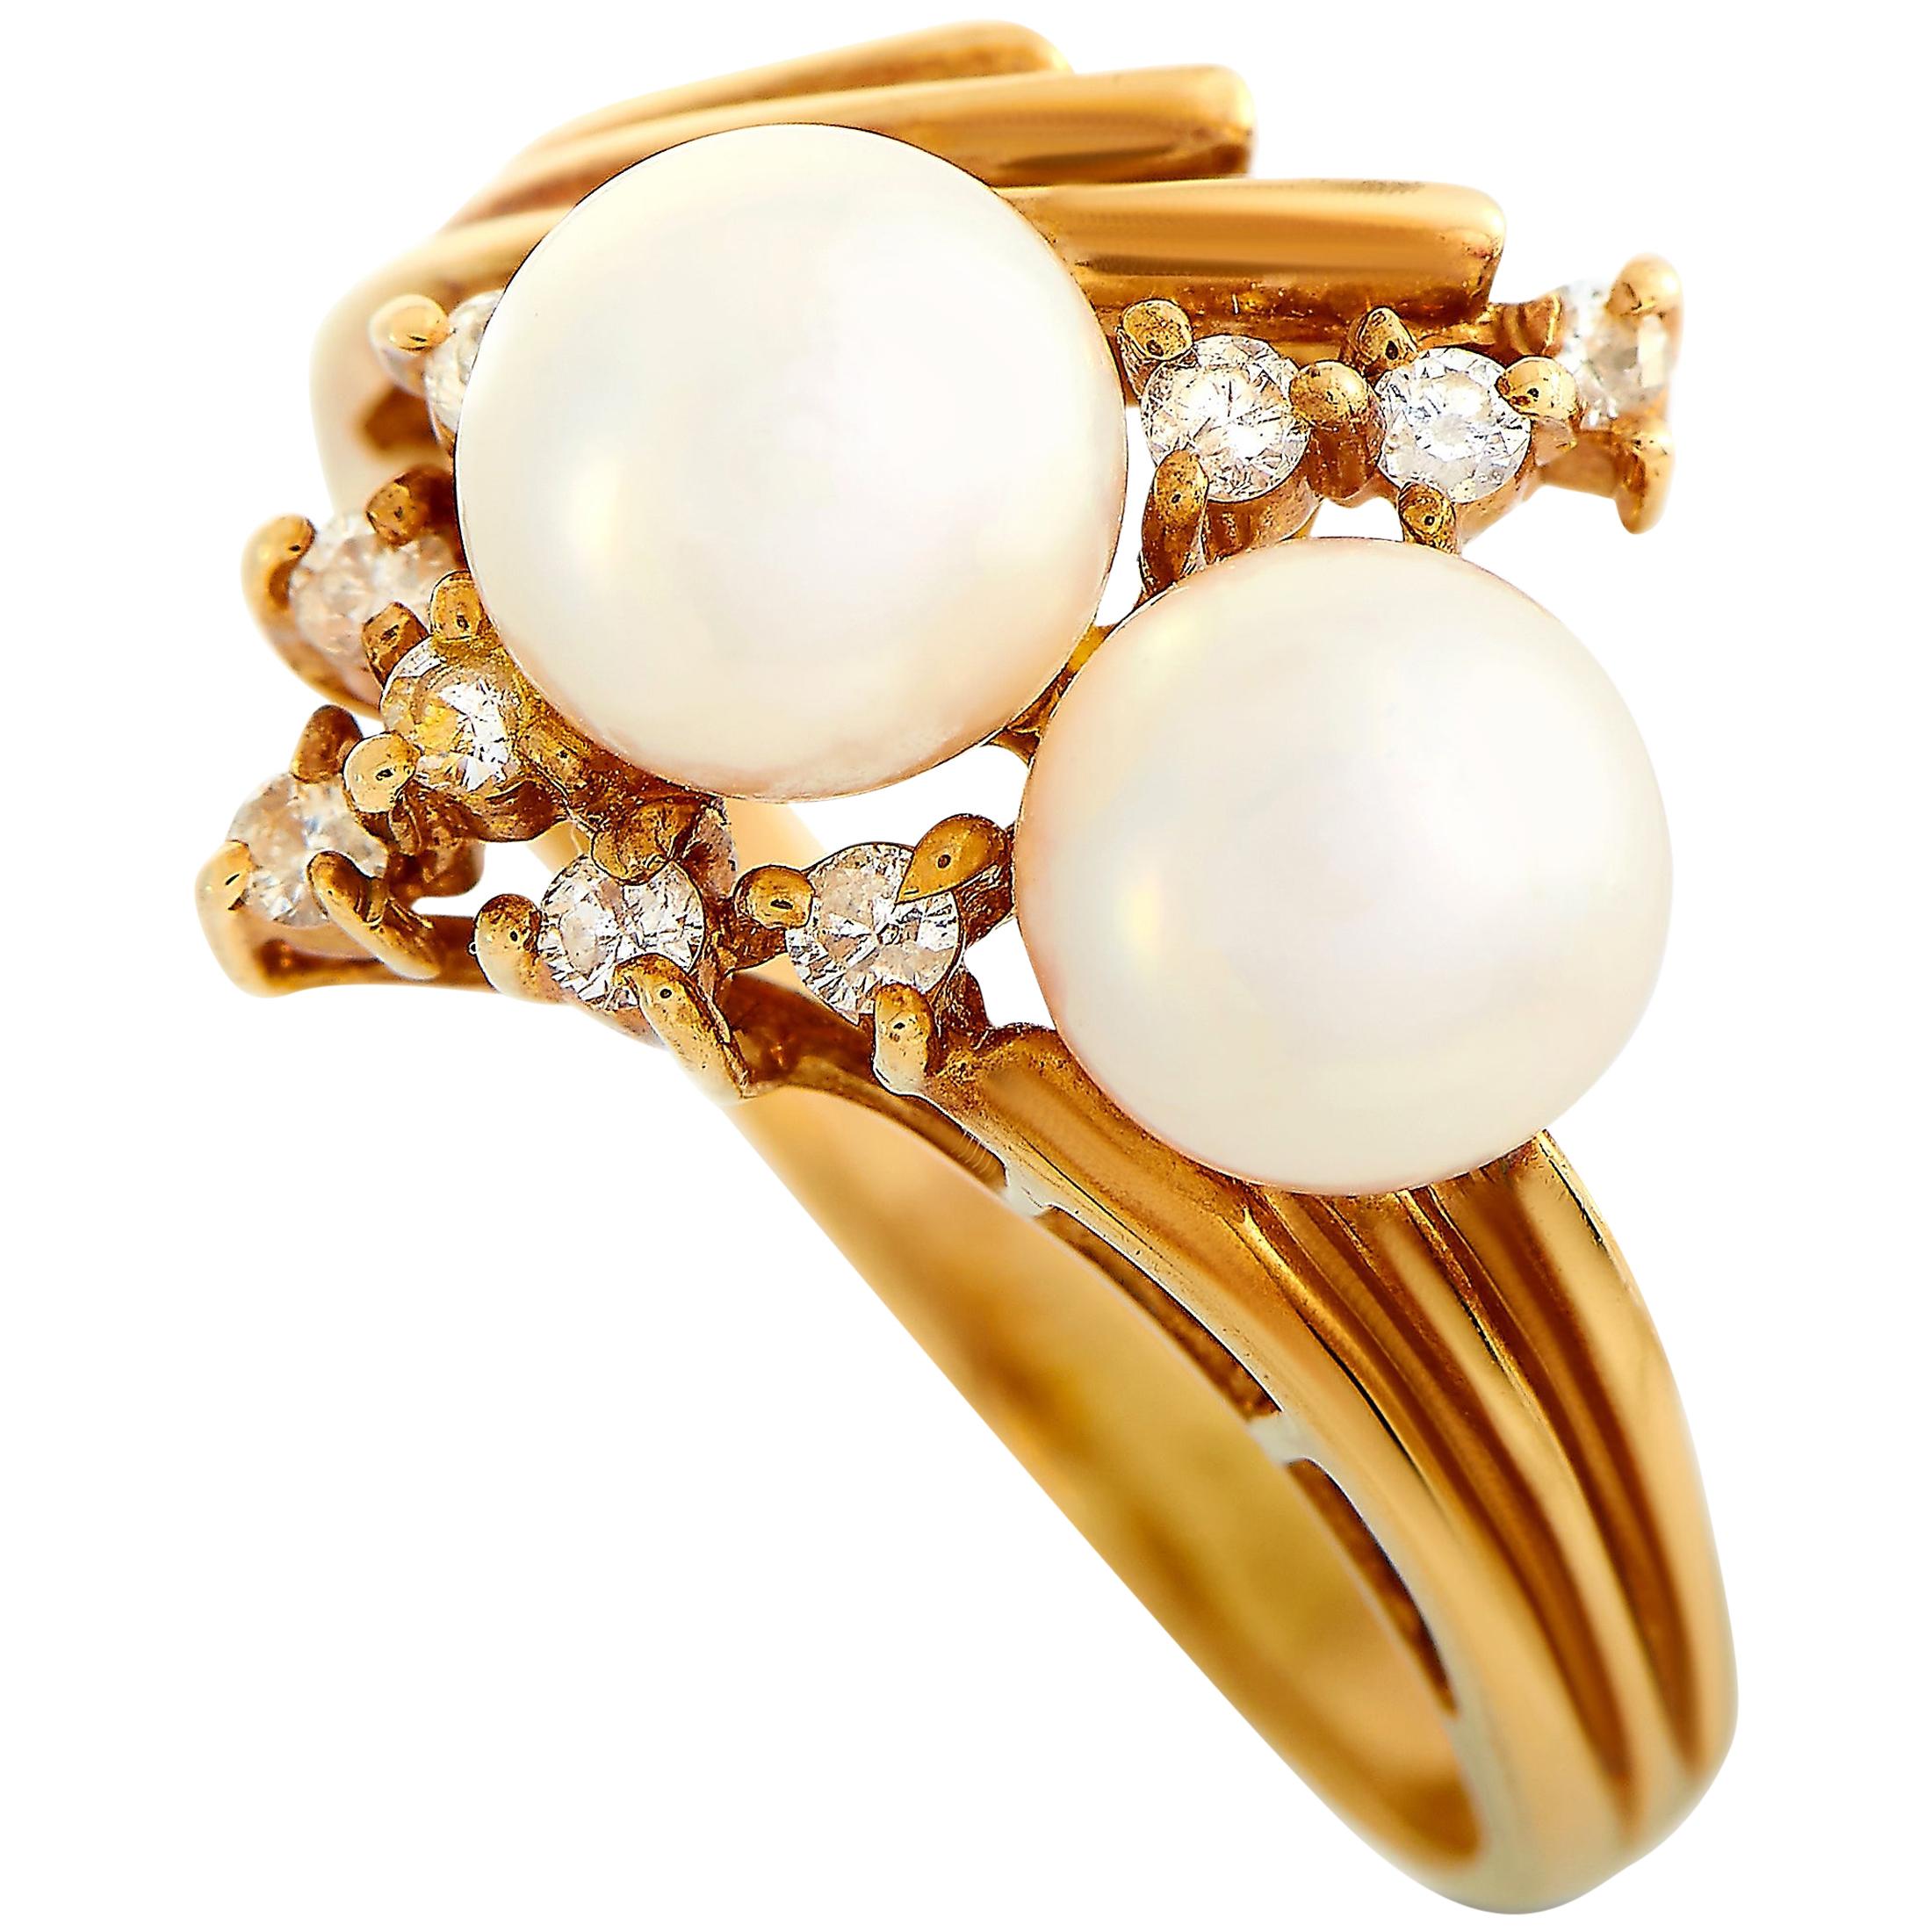 Tiffany & Co. 14 Karat Yellow Gold Diamond and Pearl Ring